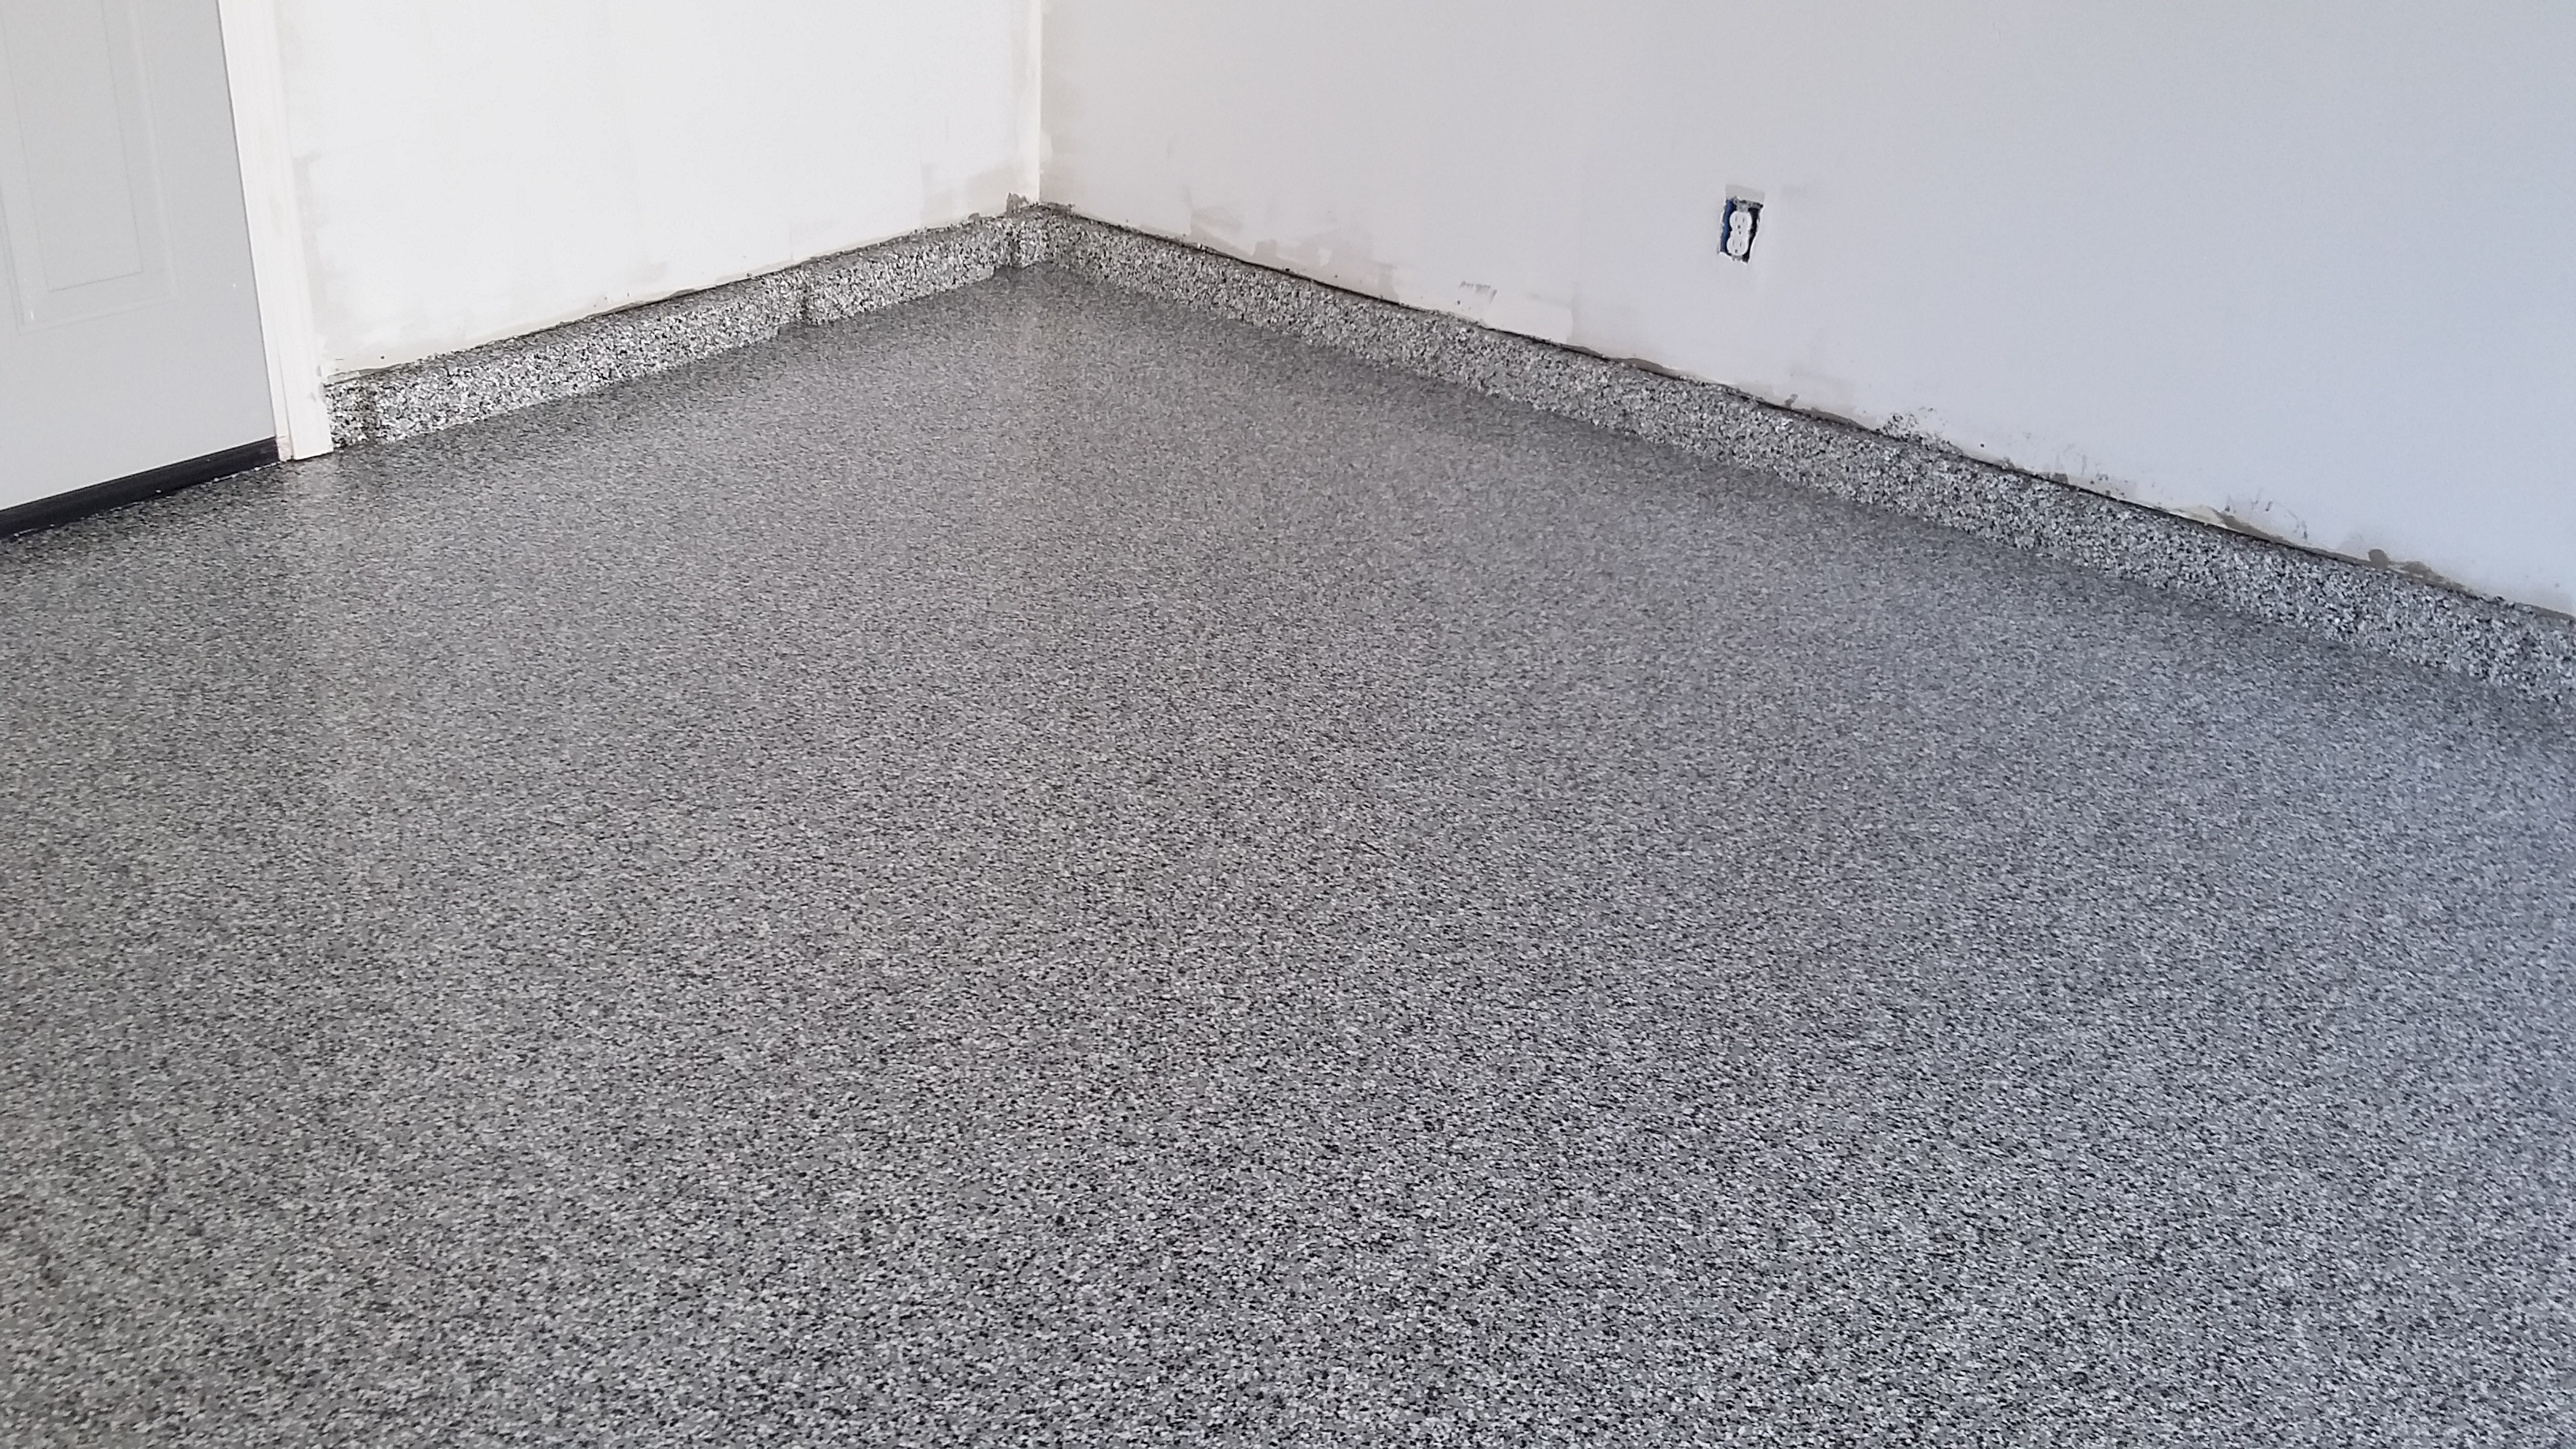 Charcoal Flake garage floor system ca-resurfacing.com